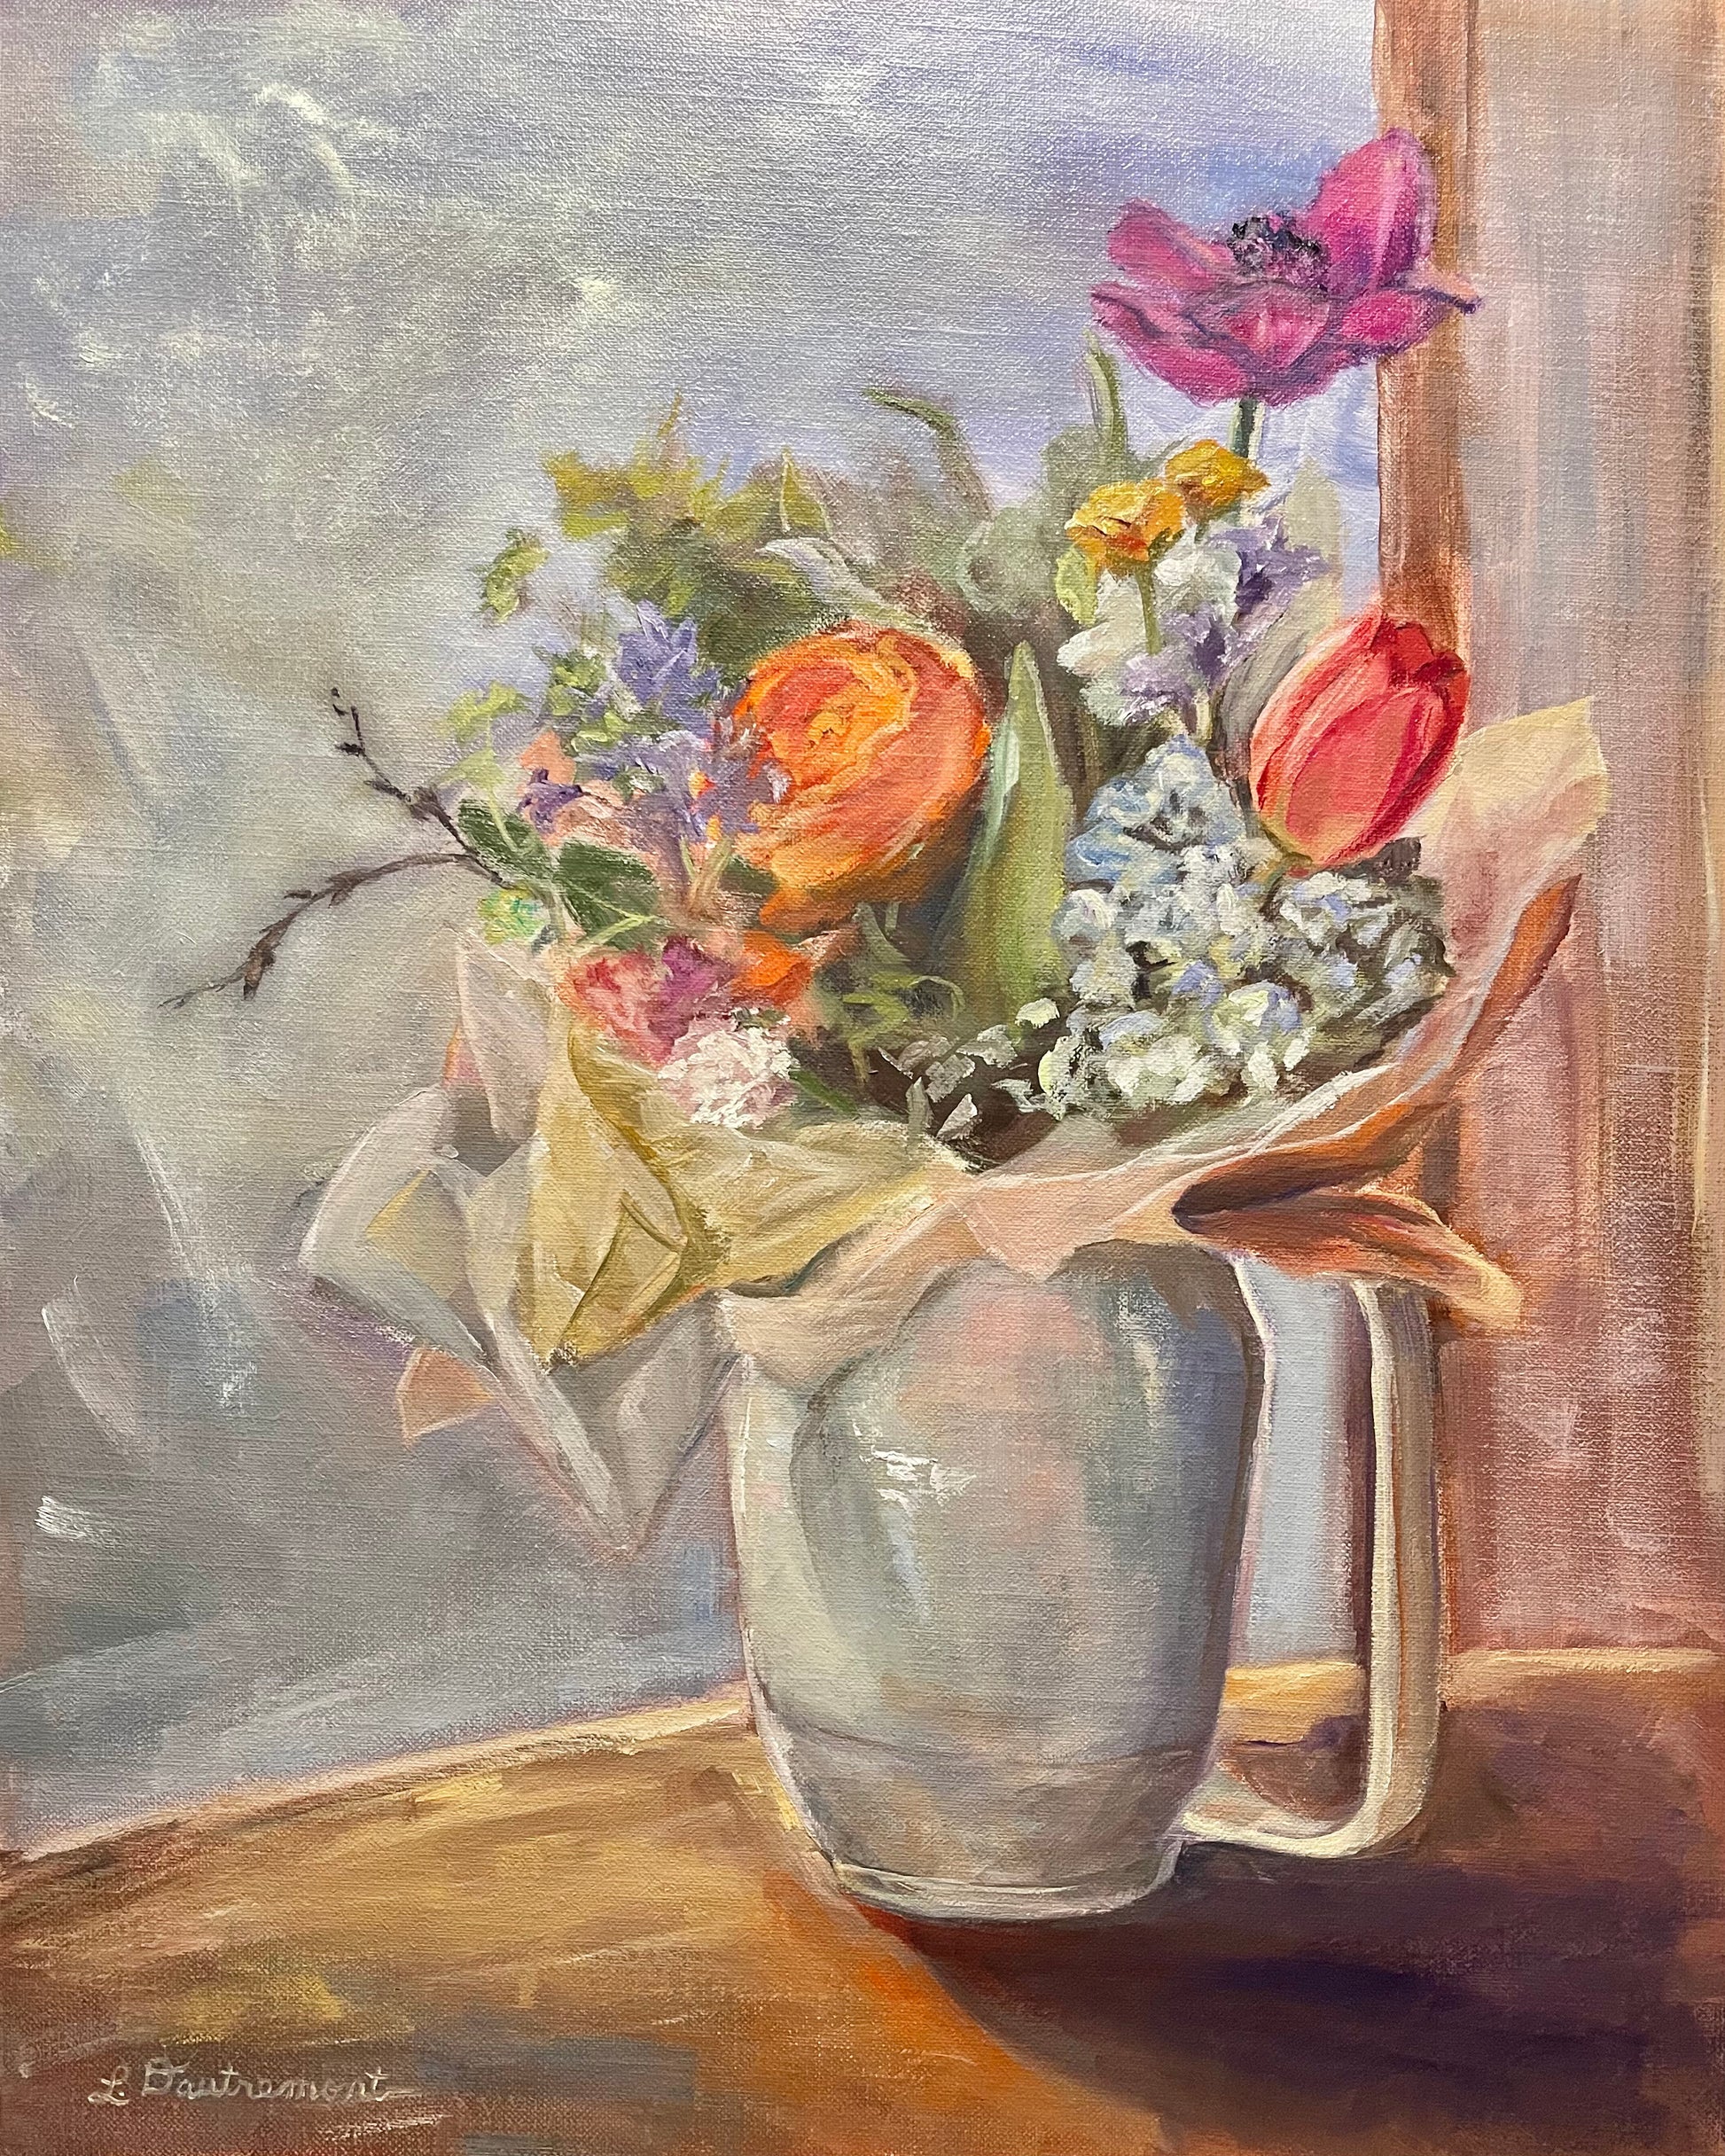 Lisa Dautremont - Flowers of Hope